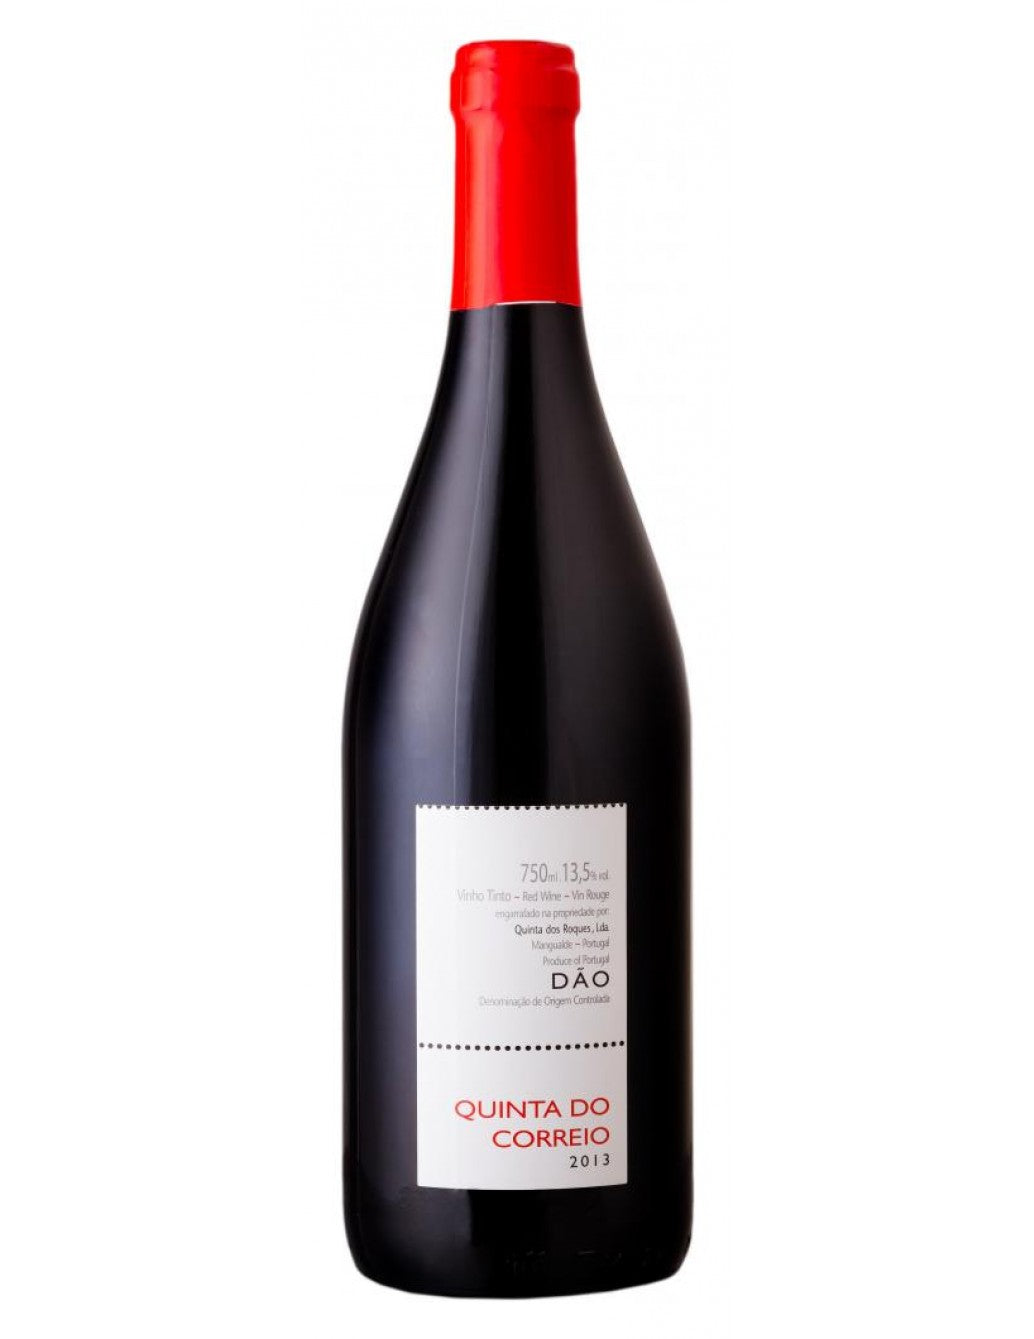 Quinta do Correio red 2016 I Dao I Portugal - Terroir Wine Imports - buy wine online Ontario, Canada 